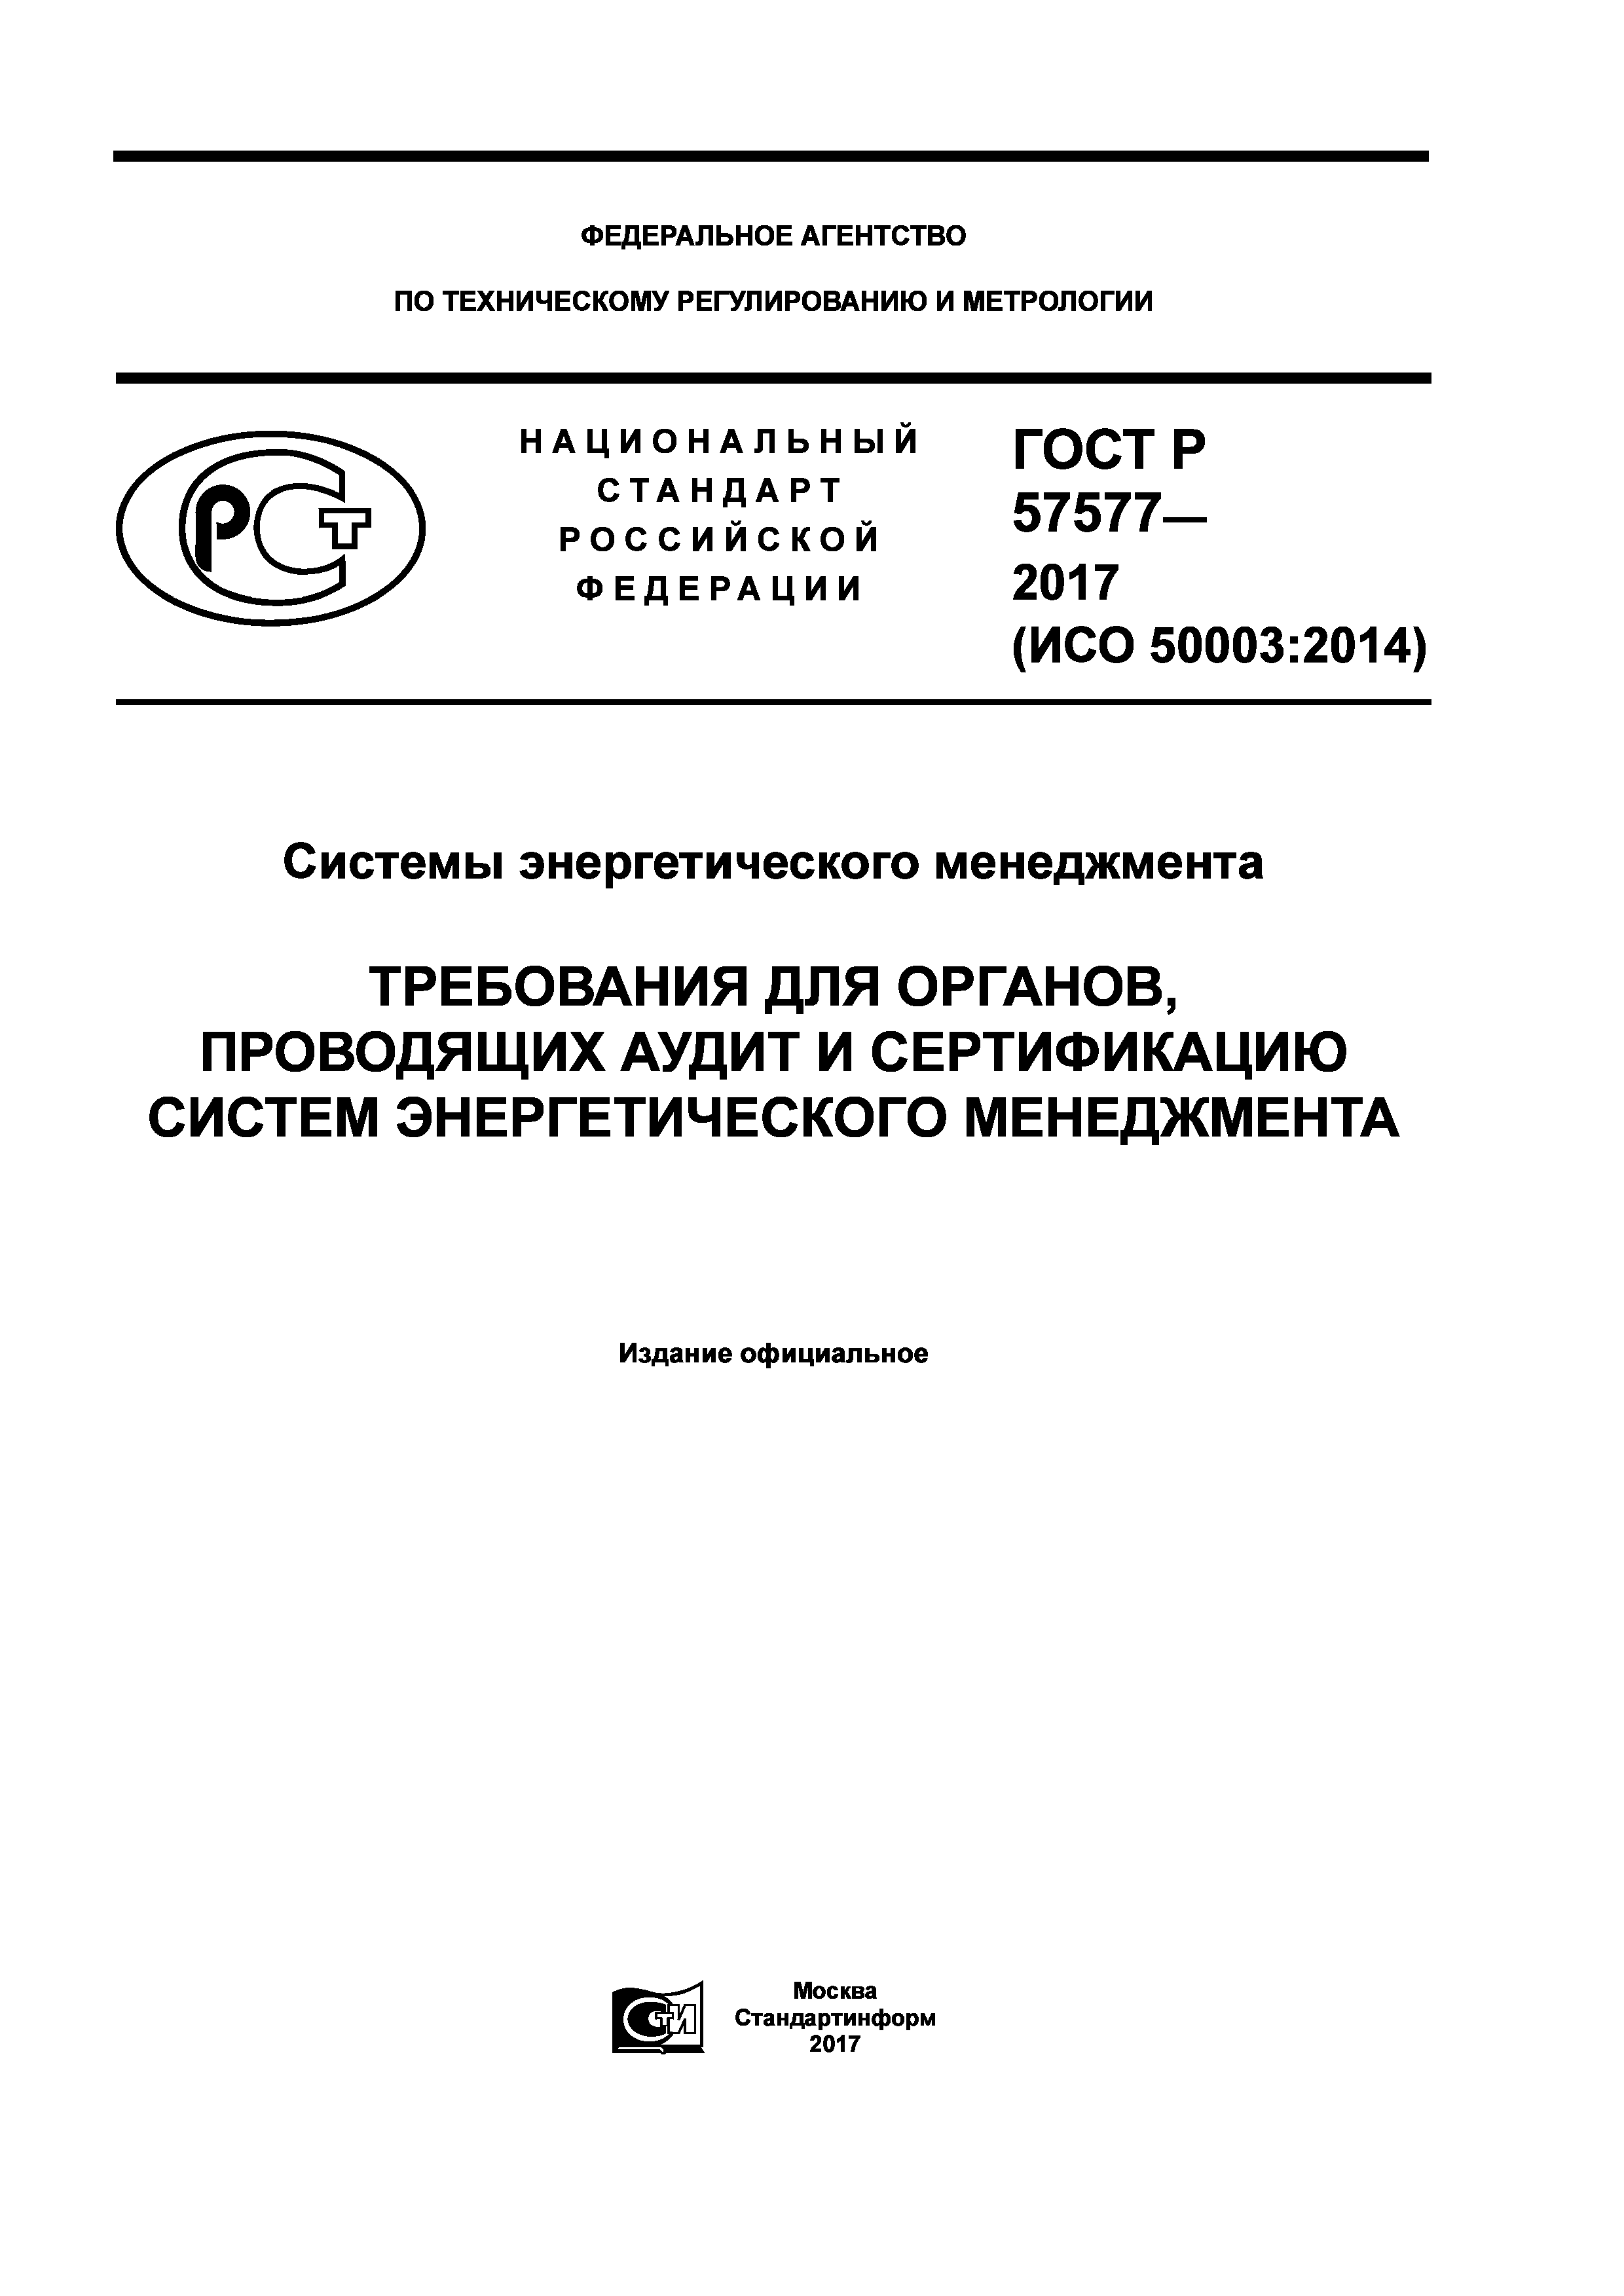 ГОСТ Р 57577-2017